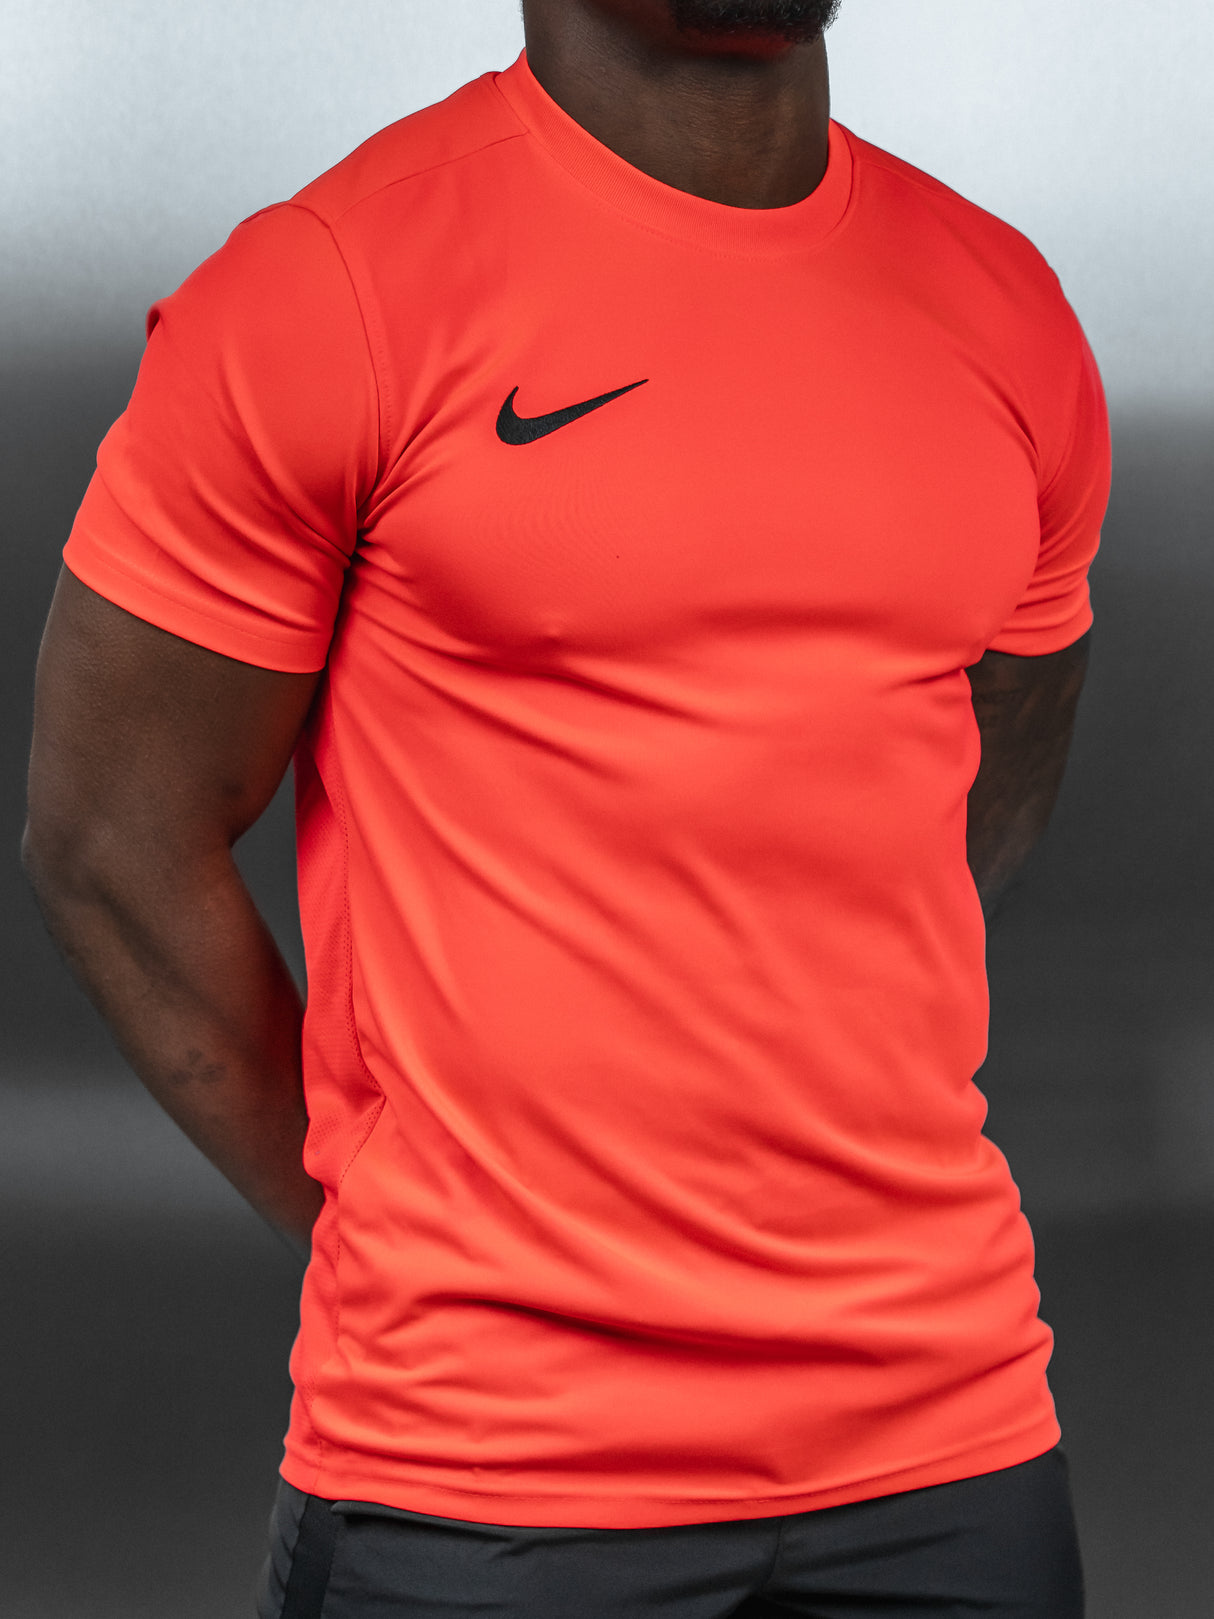 Nike - Dri Fit T Shirt - Bright Crimson